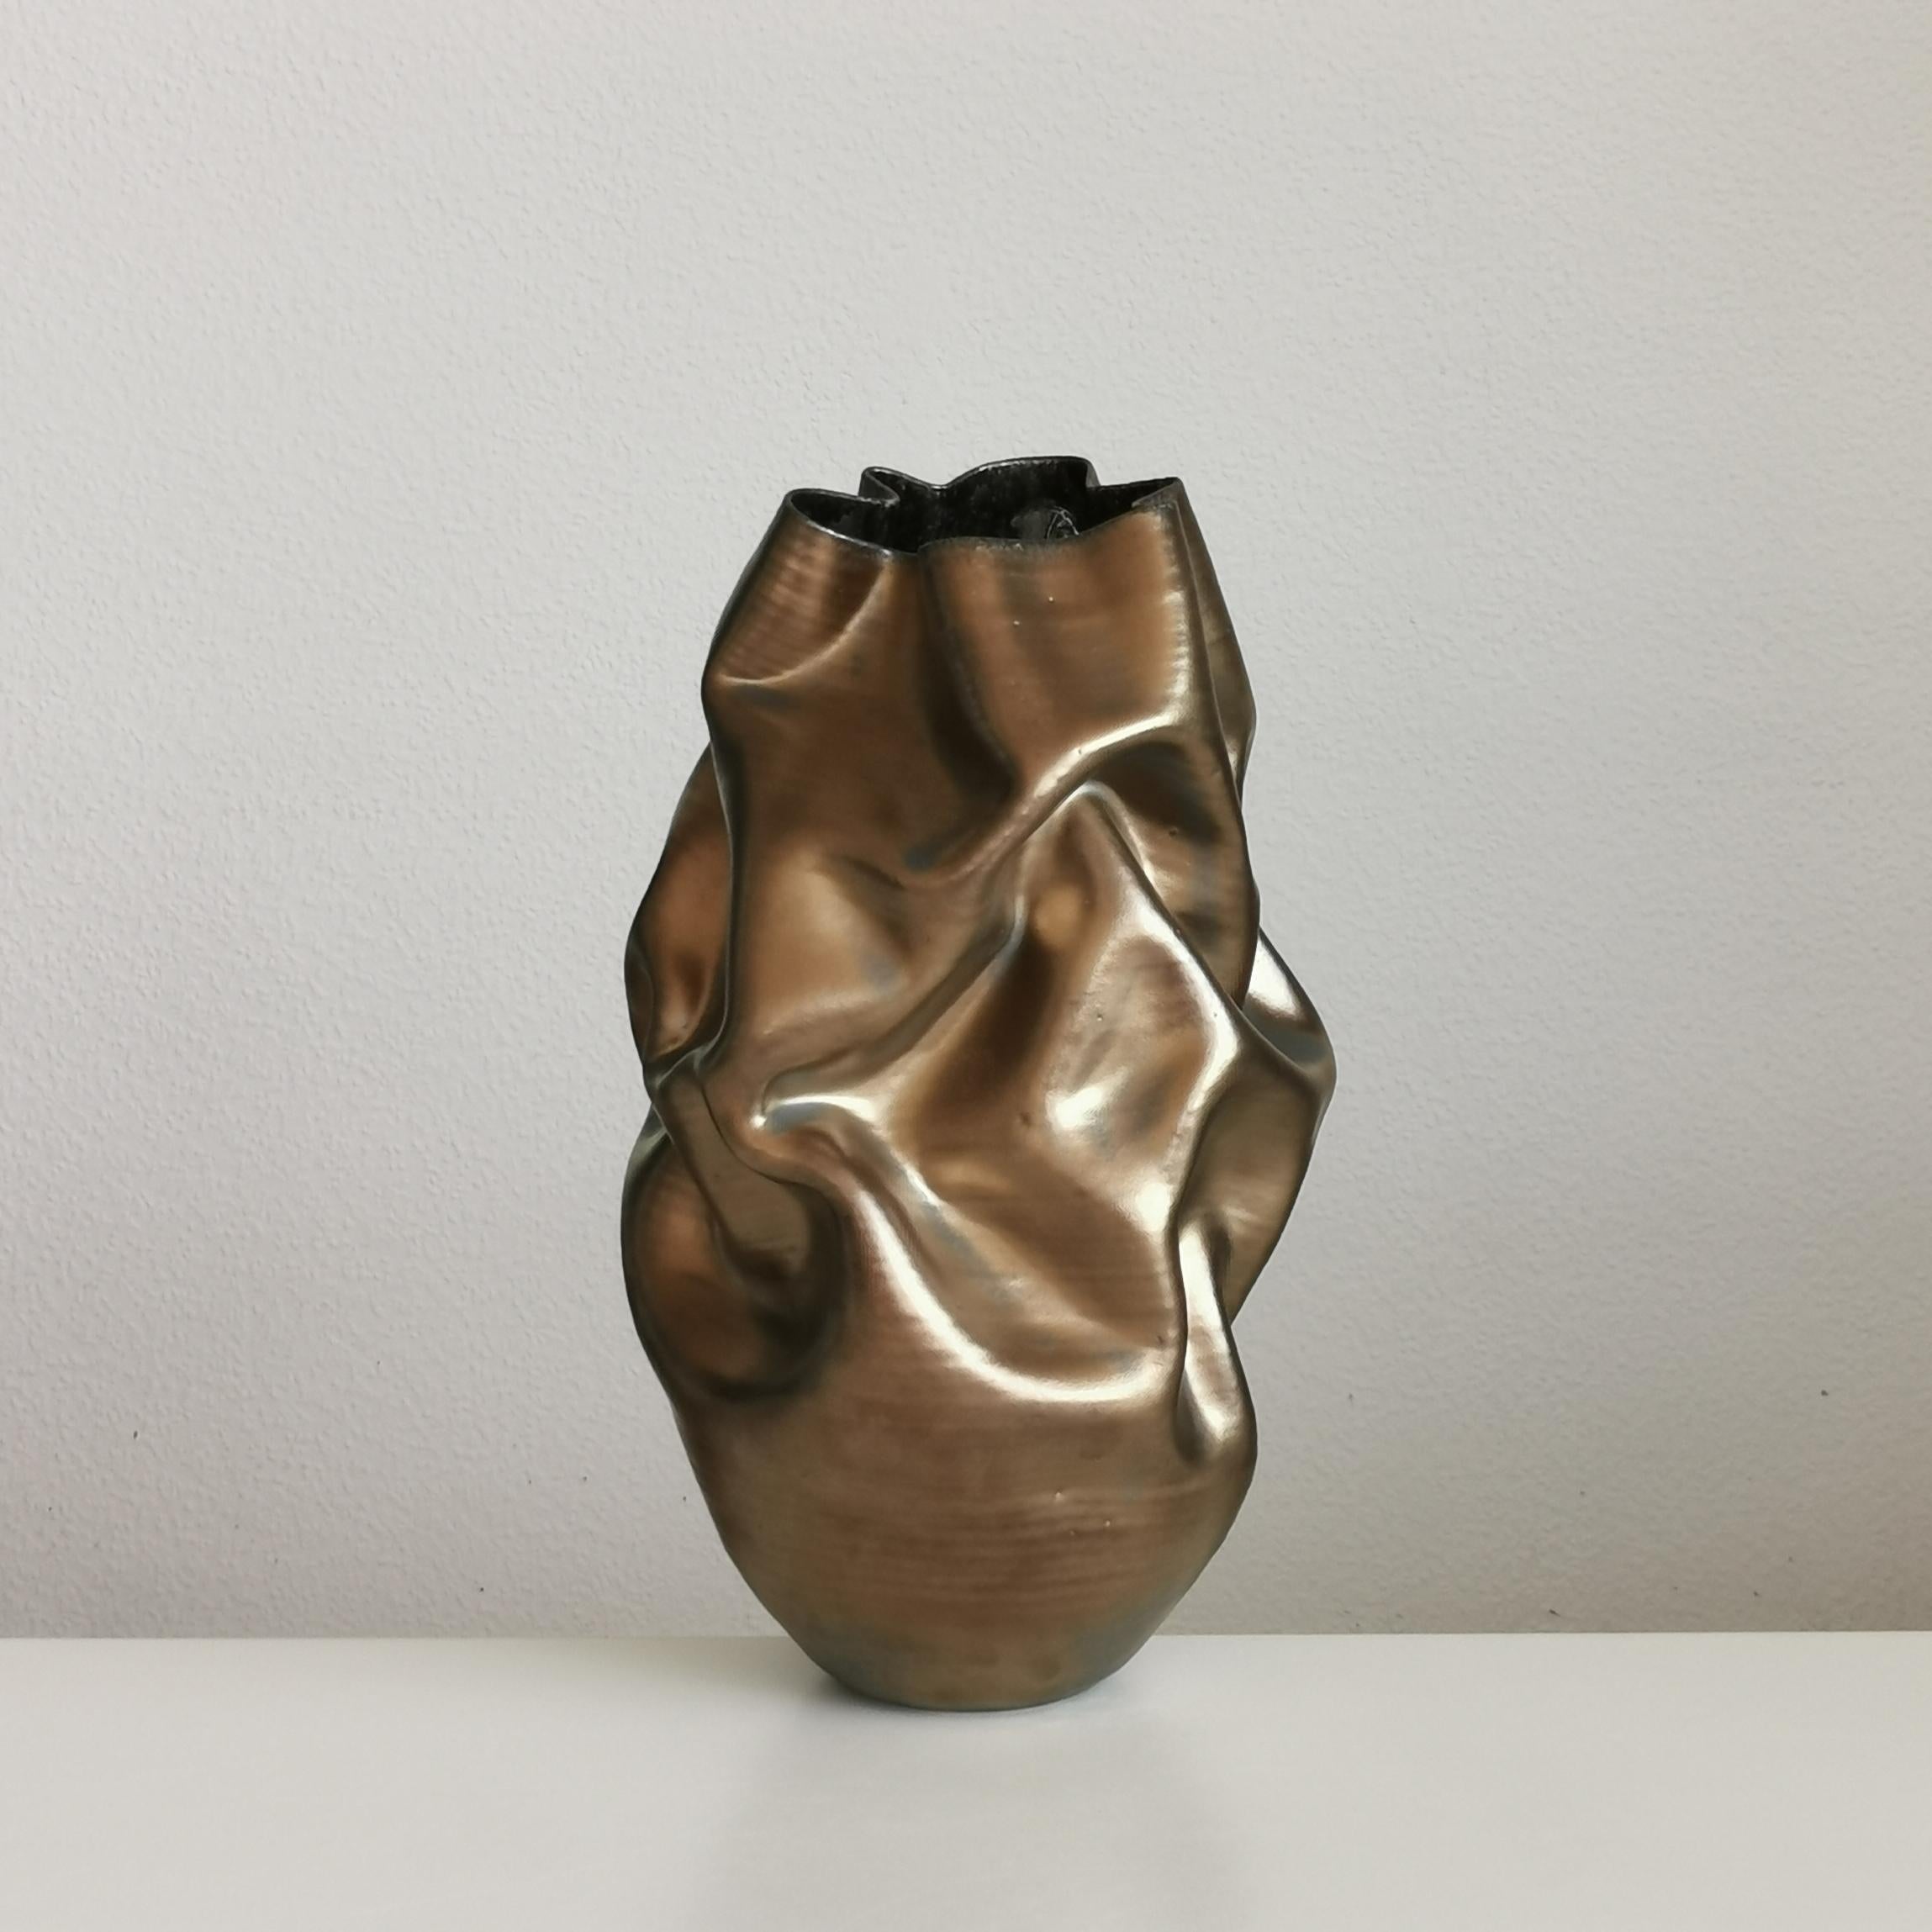 Medium Tall Gold Crumpled Form, Vessel No.131, Ceramic Sculpture For Sale 4